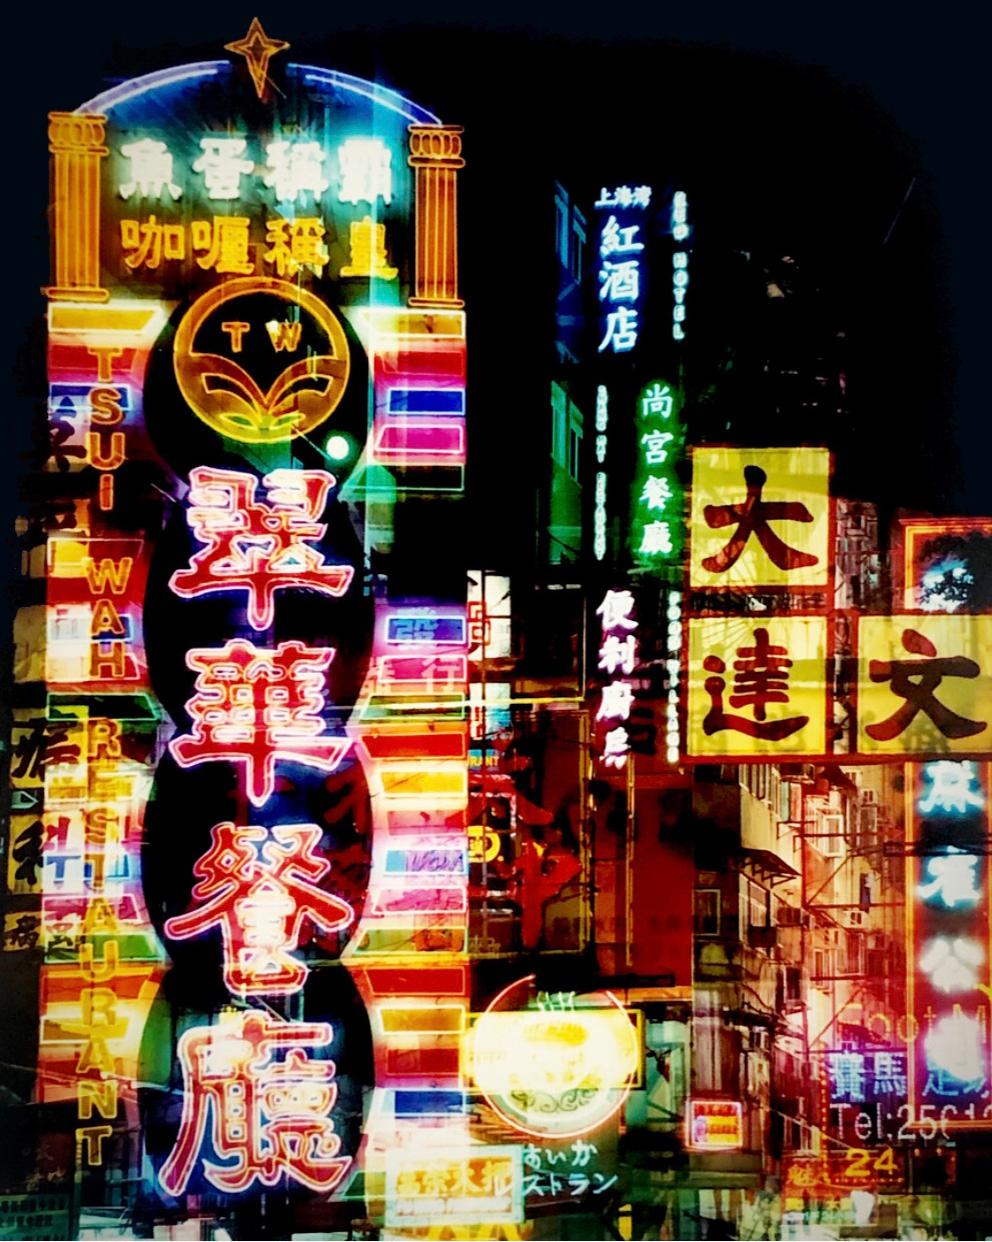 Richard Heeps Color Photograph - Lights of Mong Kok, Kowloon, Hong Kong - Conceptual Architectural Photography